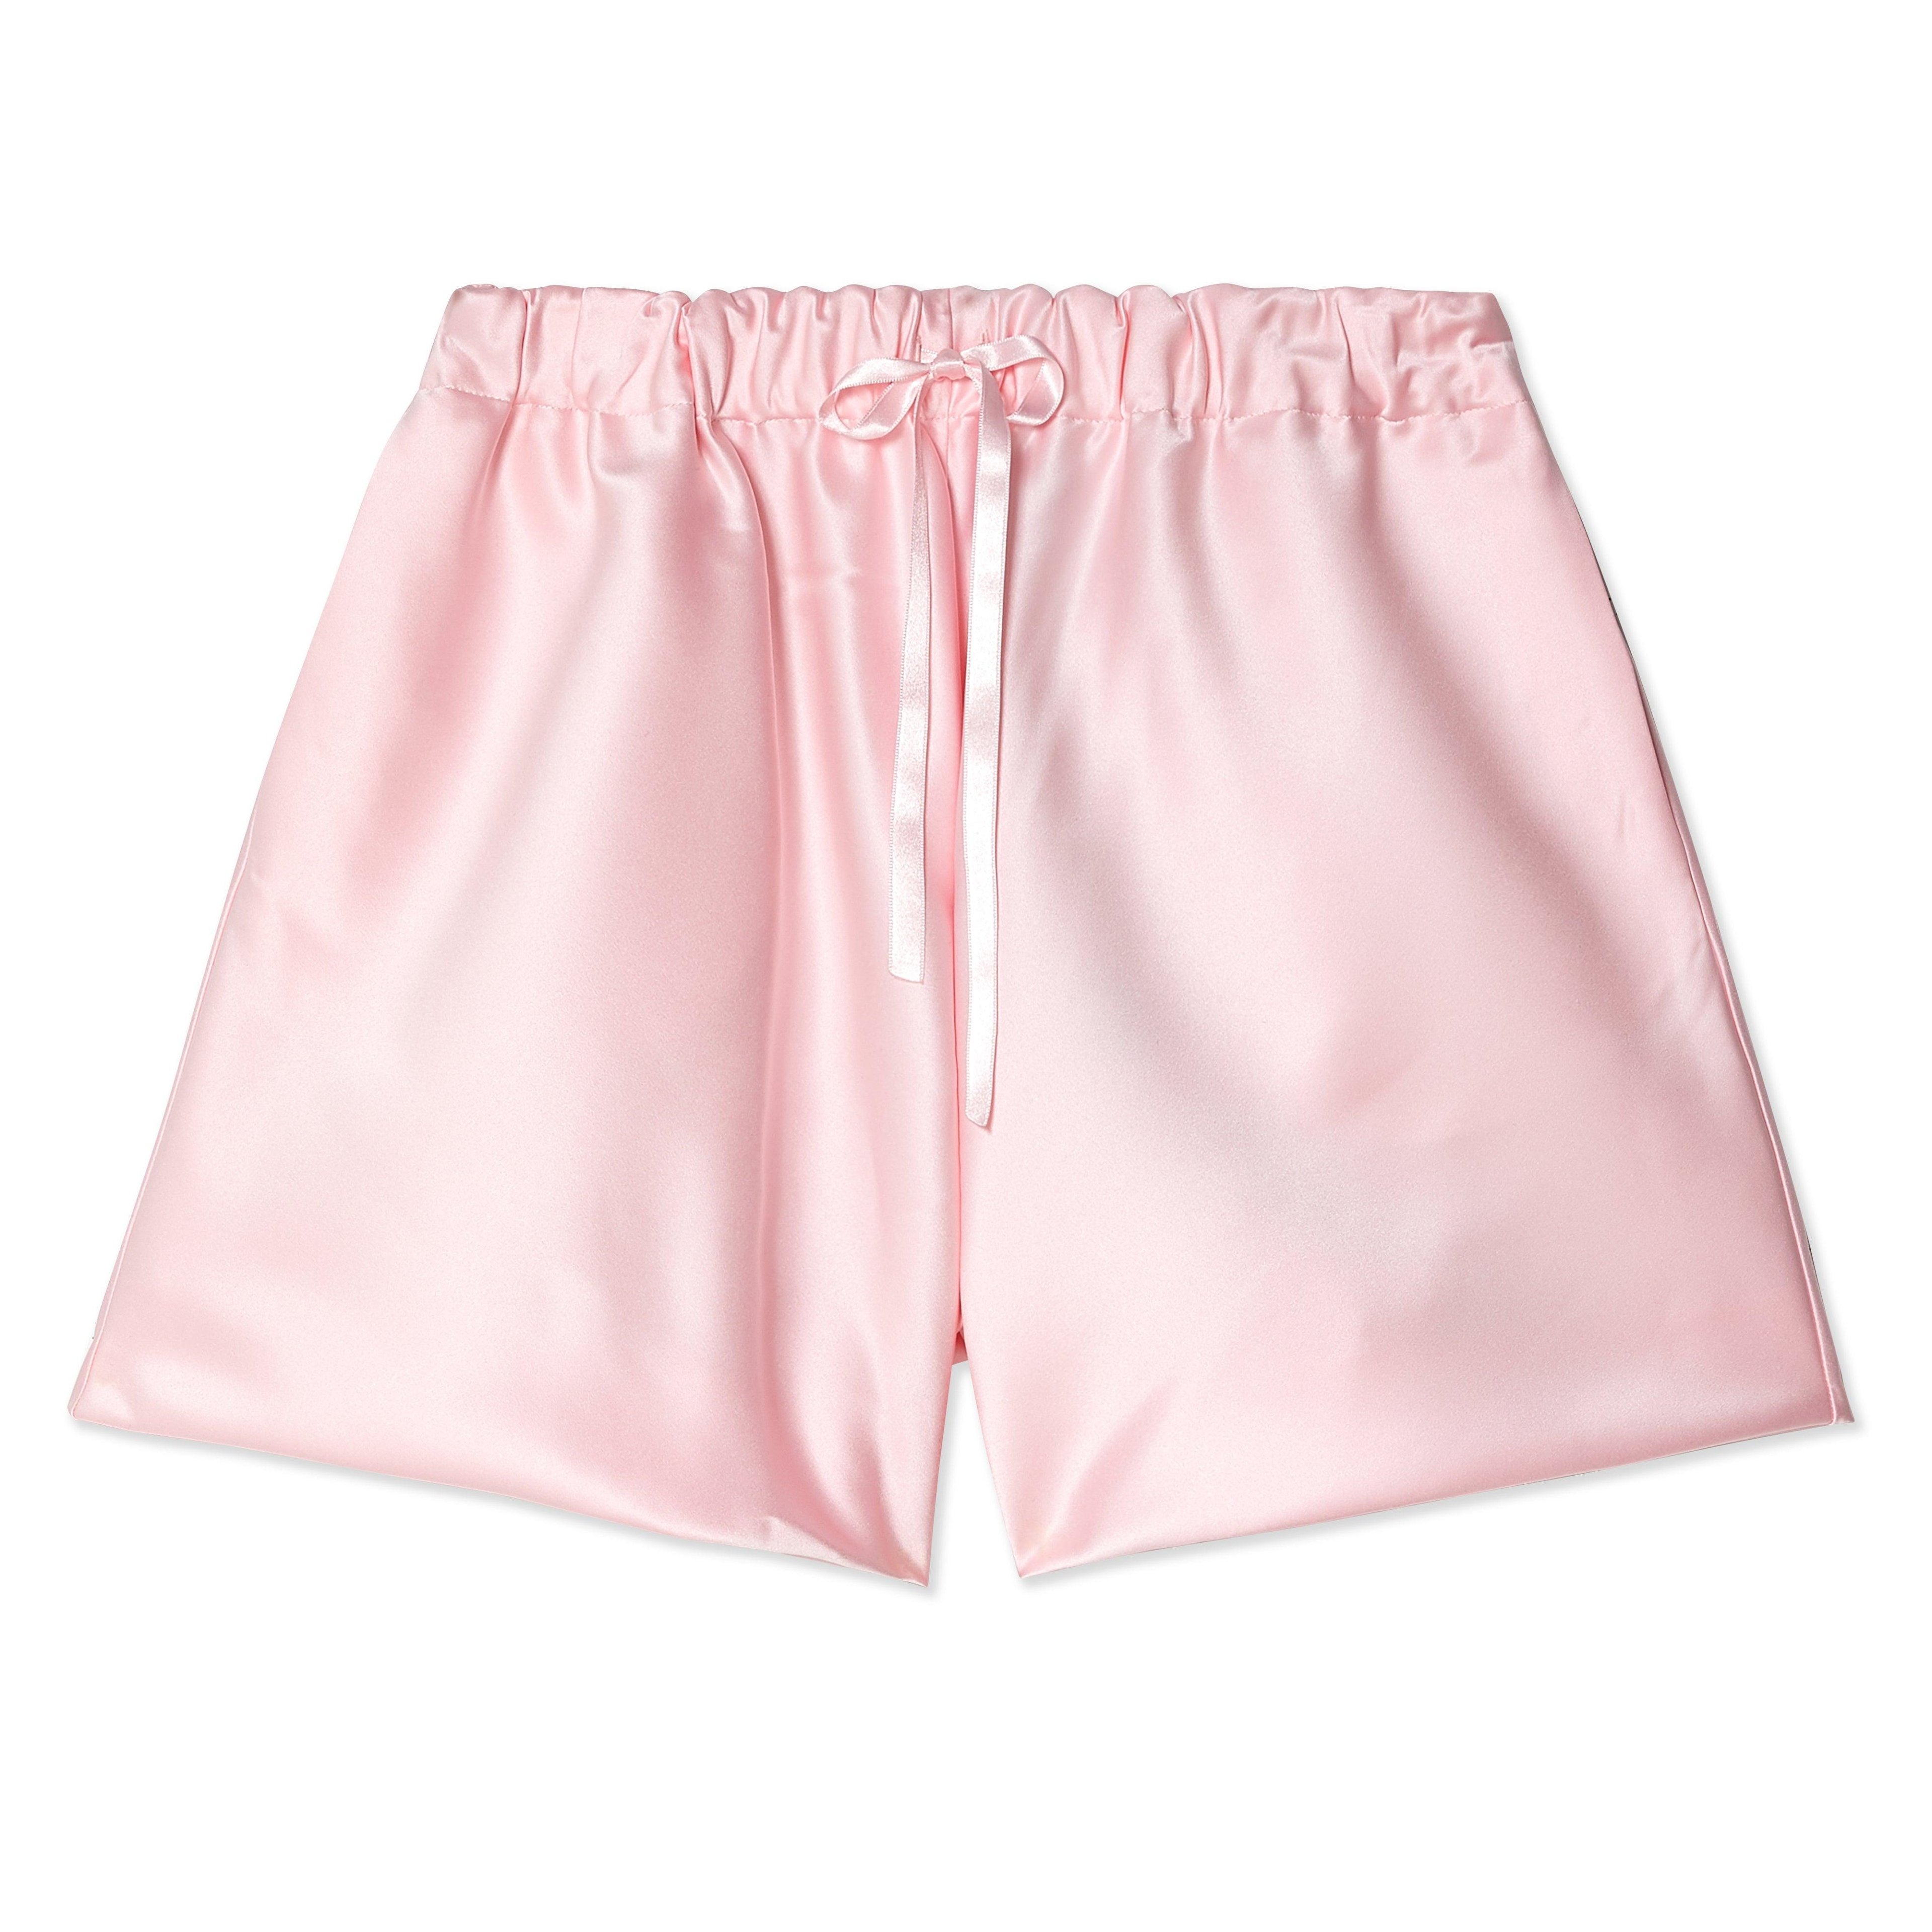 Simone Rocha - Women's Boxer Shorts - (Pink) by SIMONE ROCHA